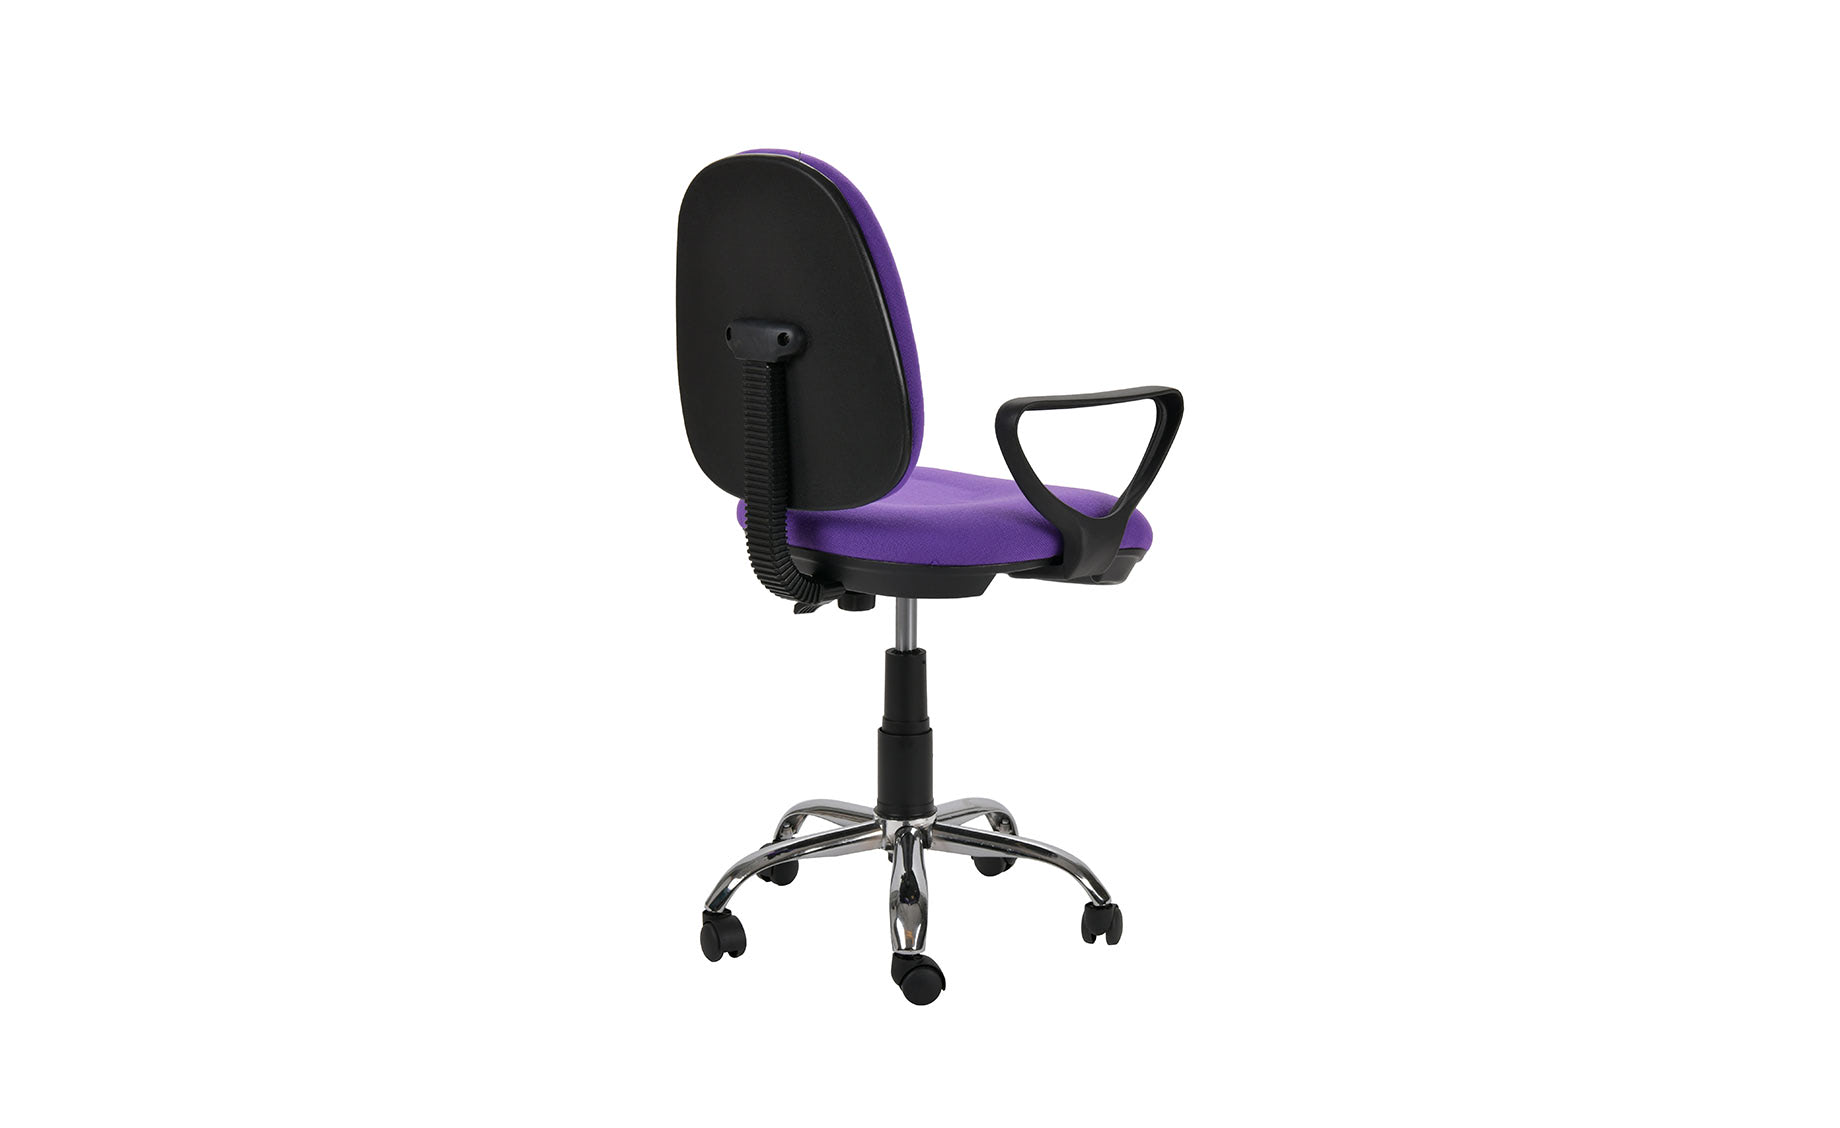 Bloom II kancelarijska stolica 58x55x88-100 cm ljubičasta